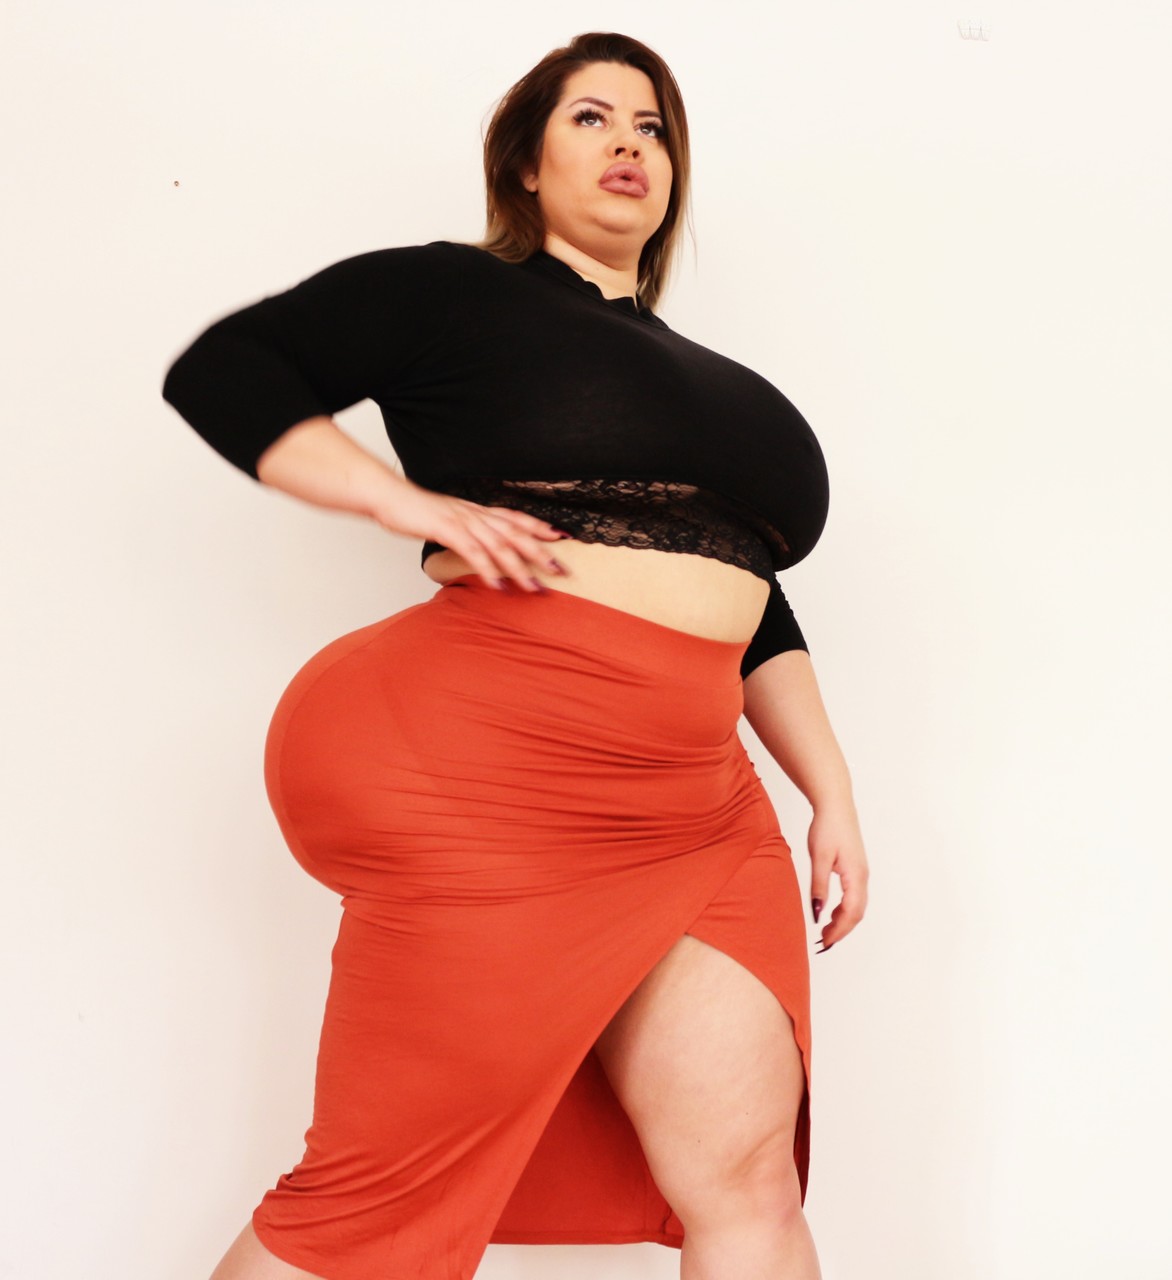 Stunning MILF fatty Natasha Crown flaunting her very big ass in a tight skirt porn photo #423816654 | Natasha Crown Pics, Natasha Crown, BBW, mobile porn